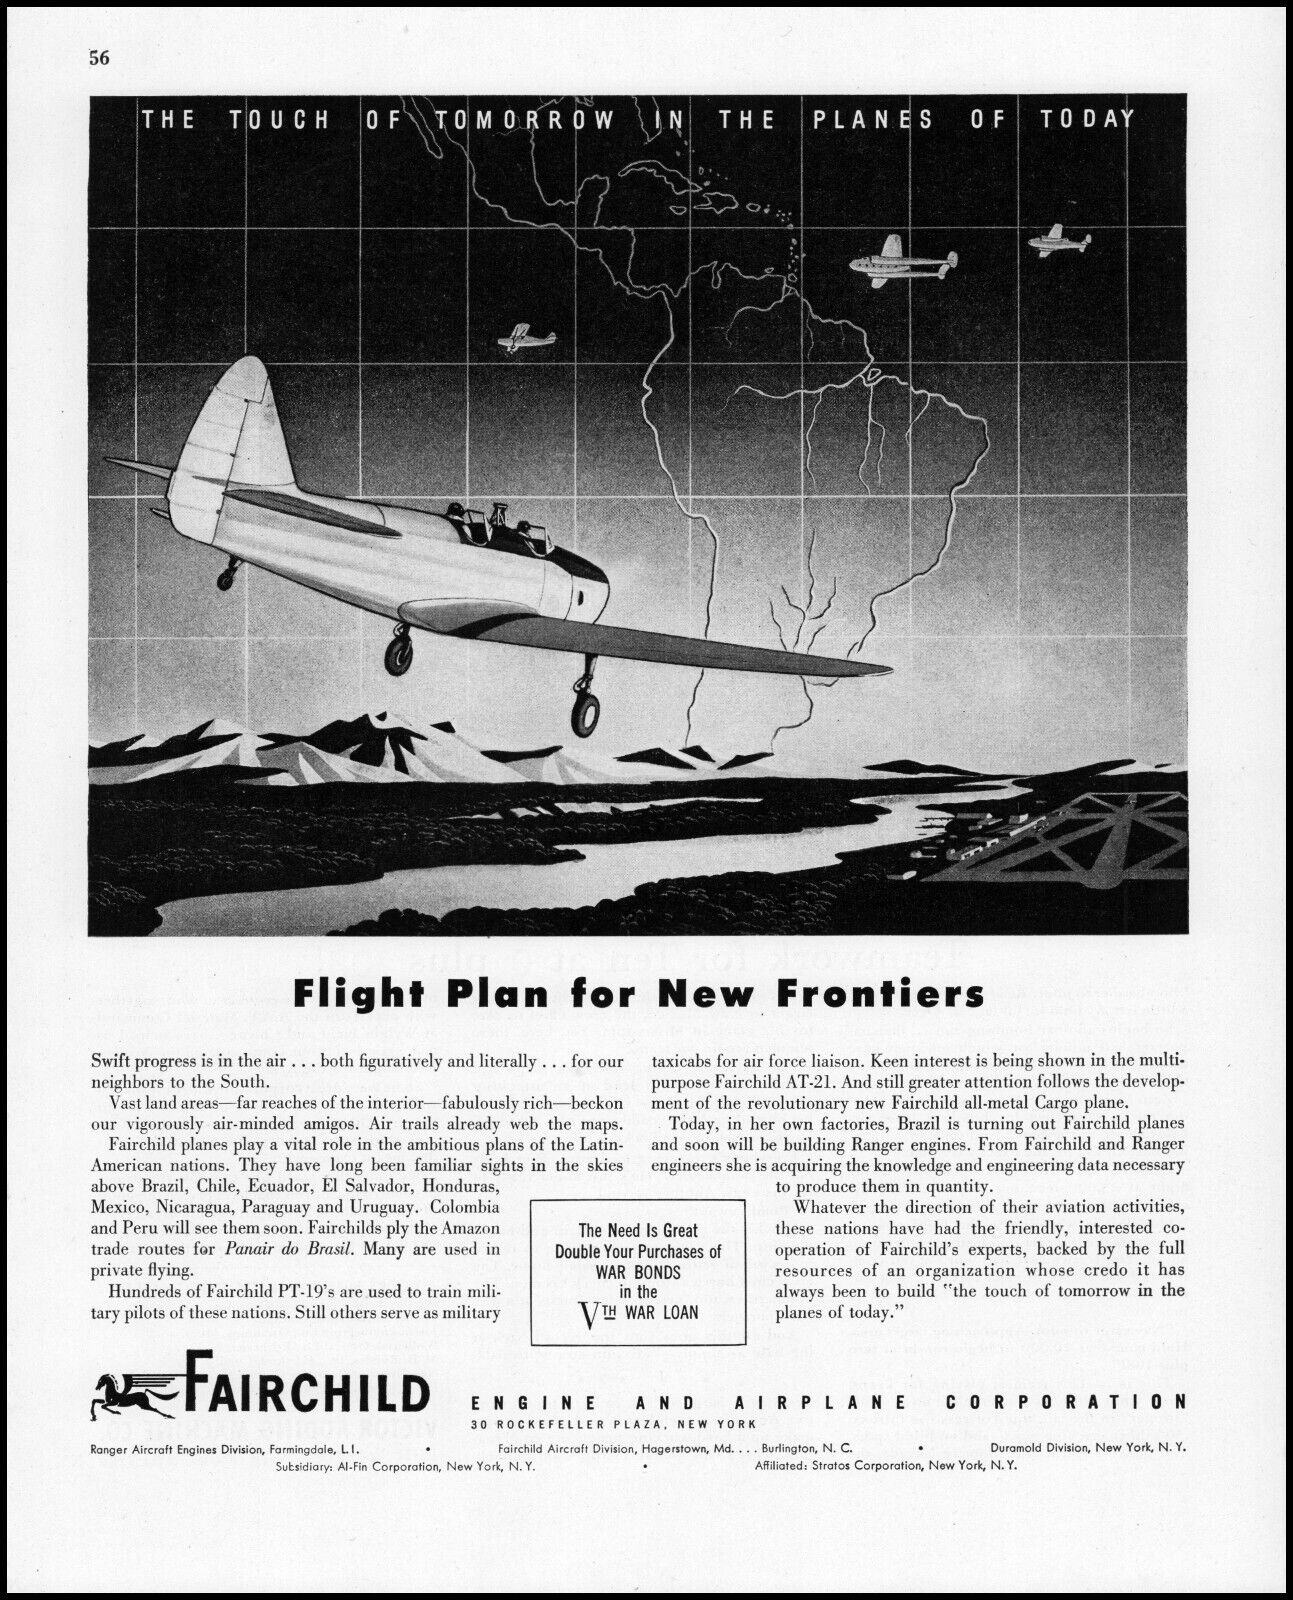 1944 Fairchild Airplane Corporation engines PT-19 vintage art print ad adl76